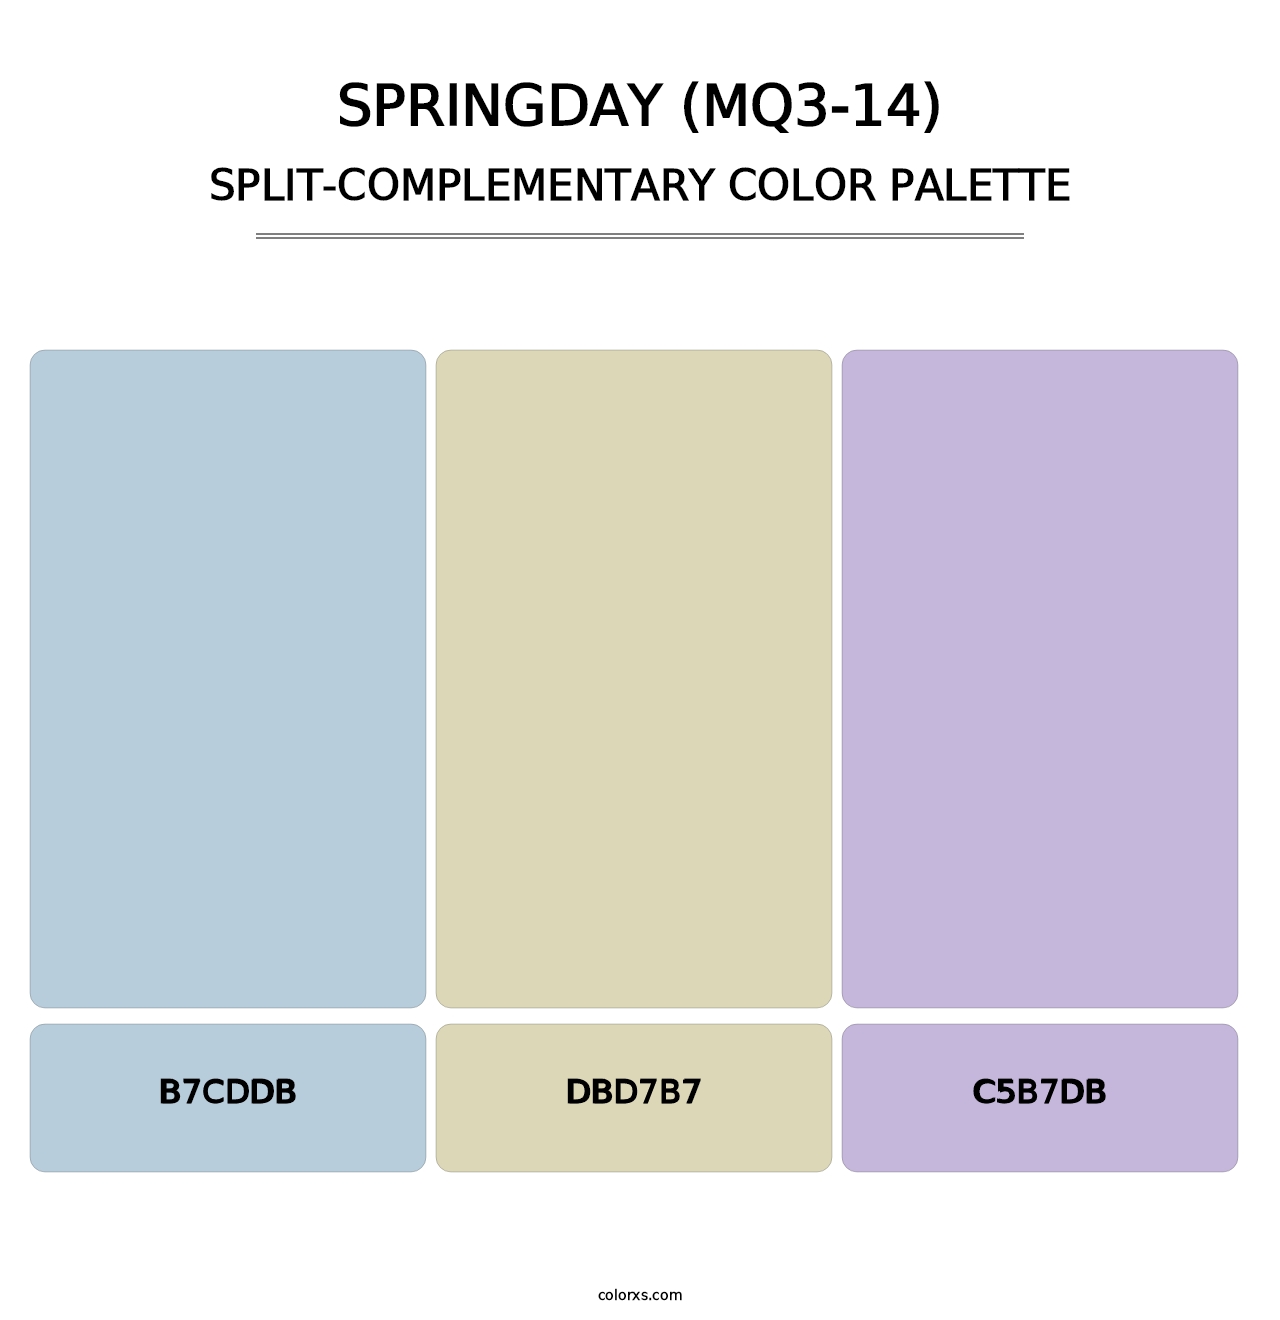 Springday (MQ3-14) - Split-Complementary Color Palette